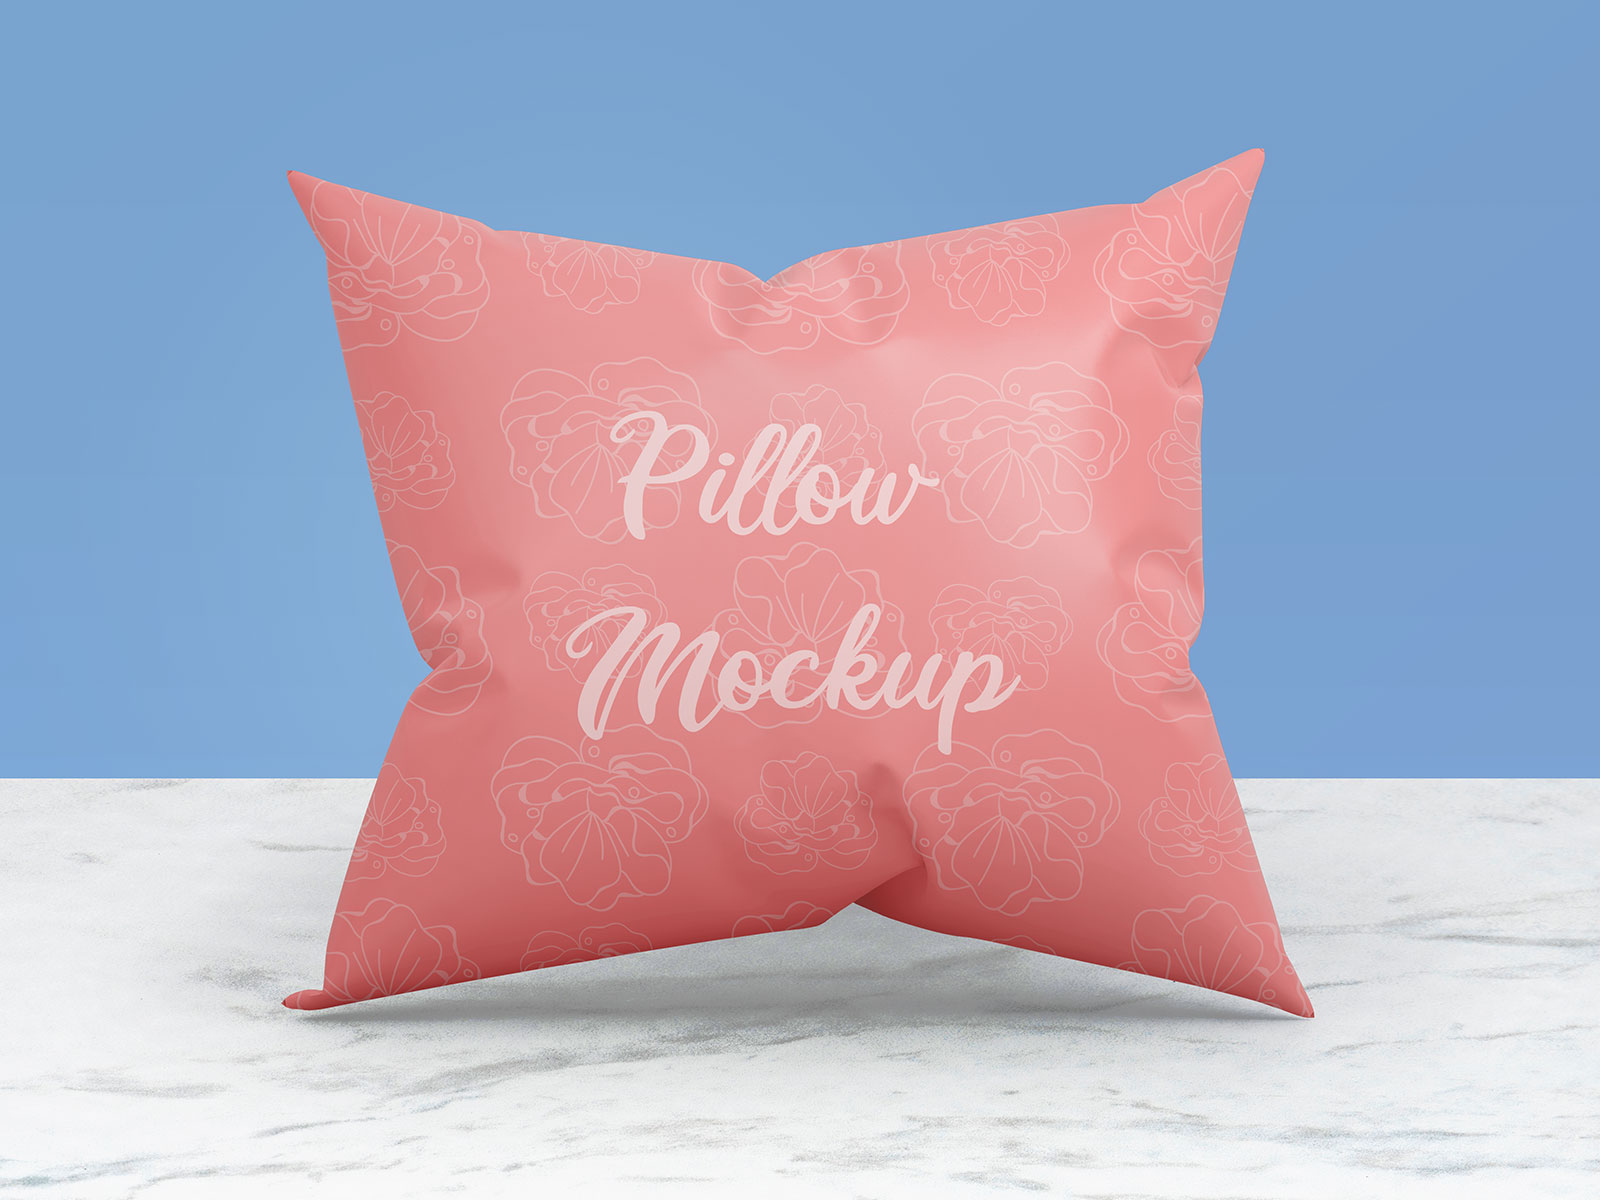 Free-Square-Throw-Pillow-mockup-PSD-Set